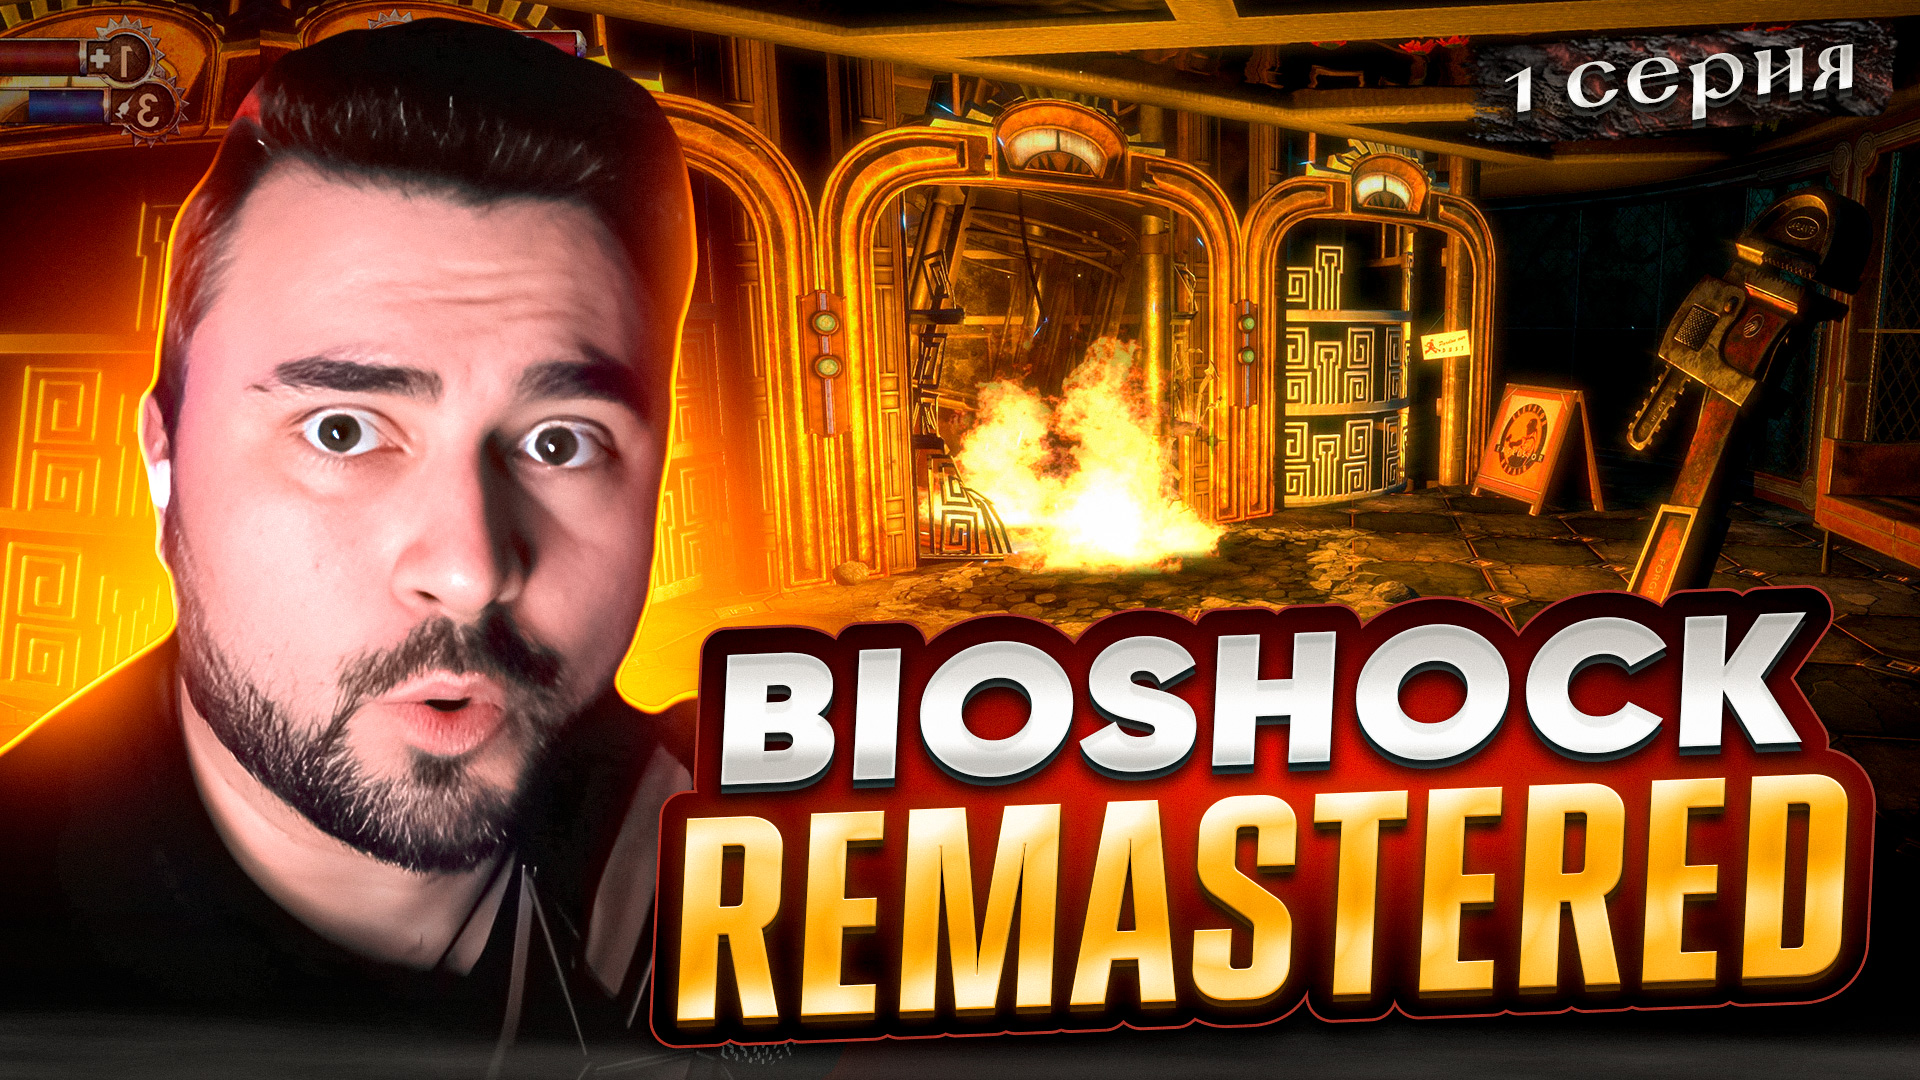 Bioshock Remastered- Я В ВОСТОРГЕ!!! ОБЗОР Bioshock Remastered ► Часть 1